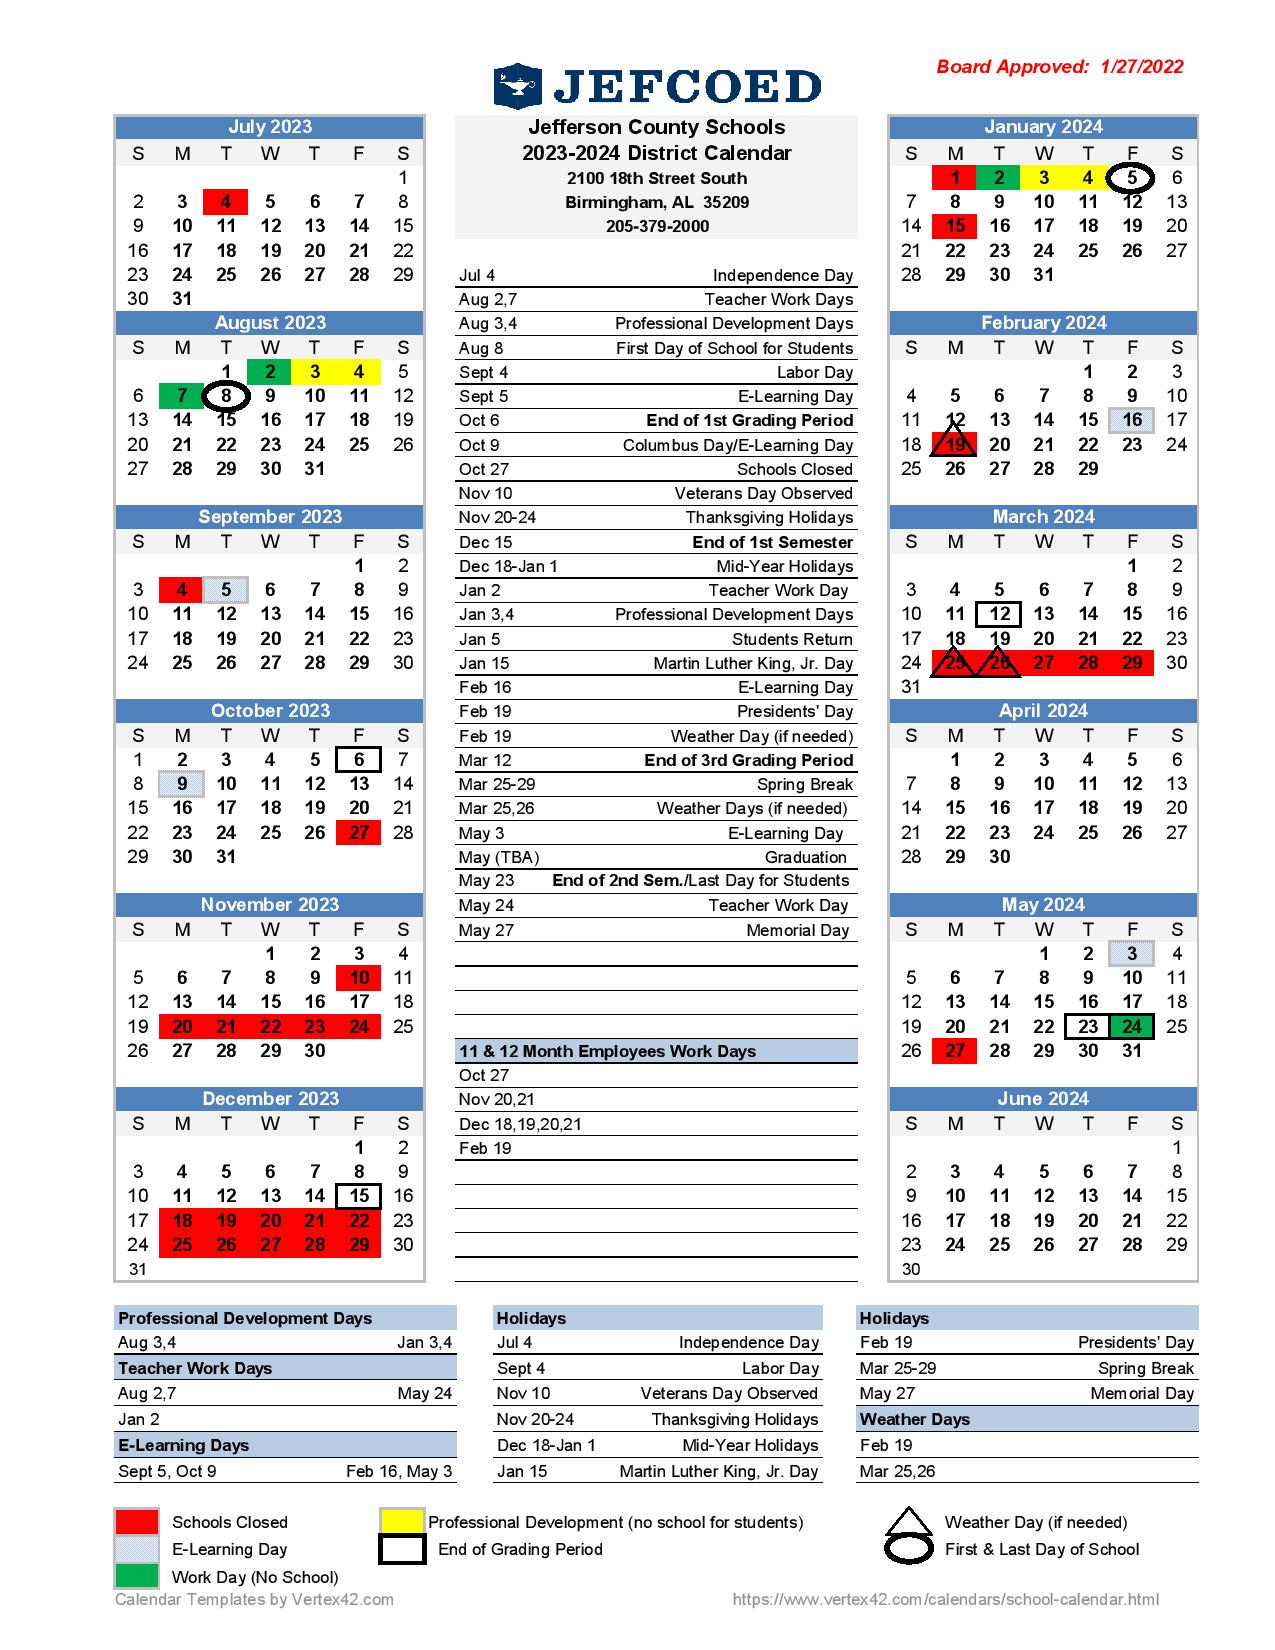 jefferson-county-schools-calendar-holidays-2023-2024-pdf